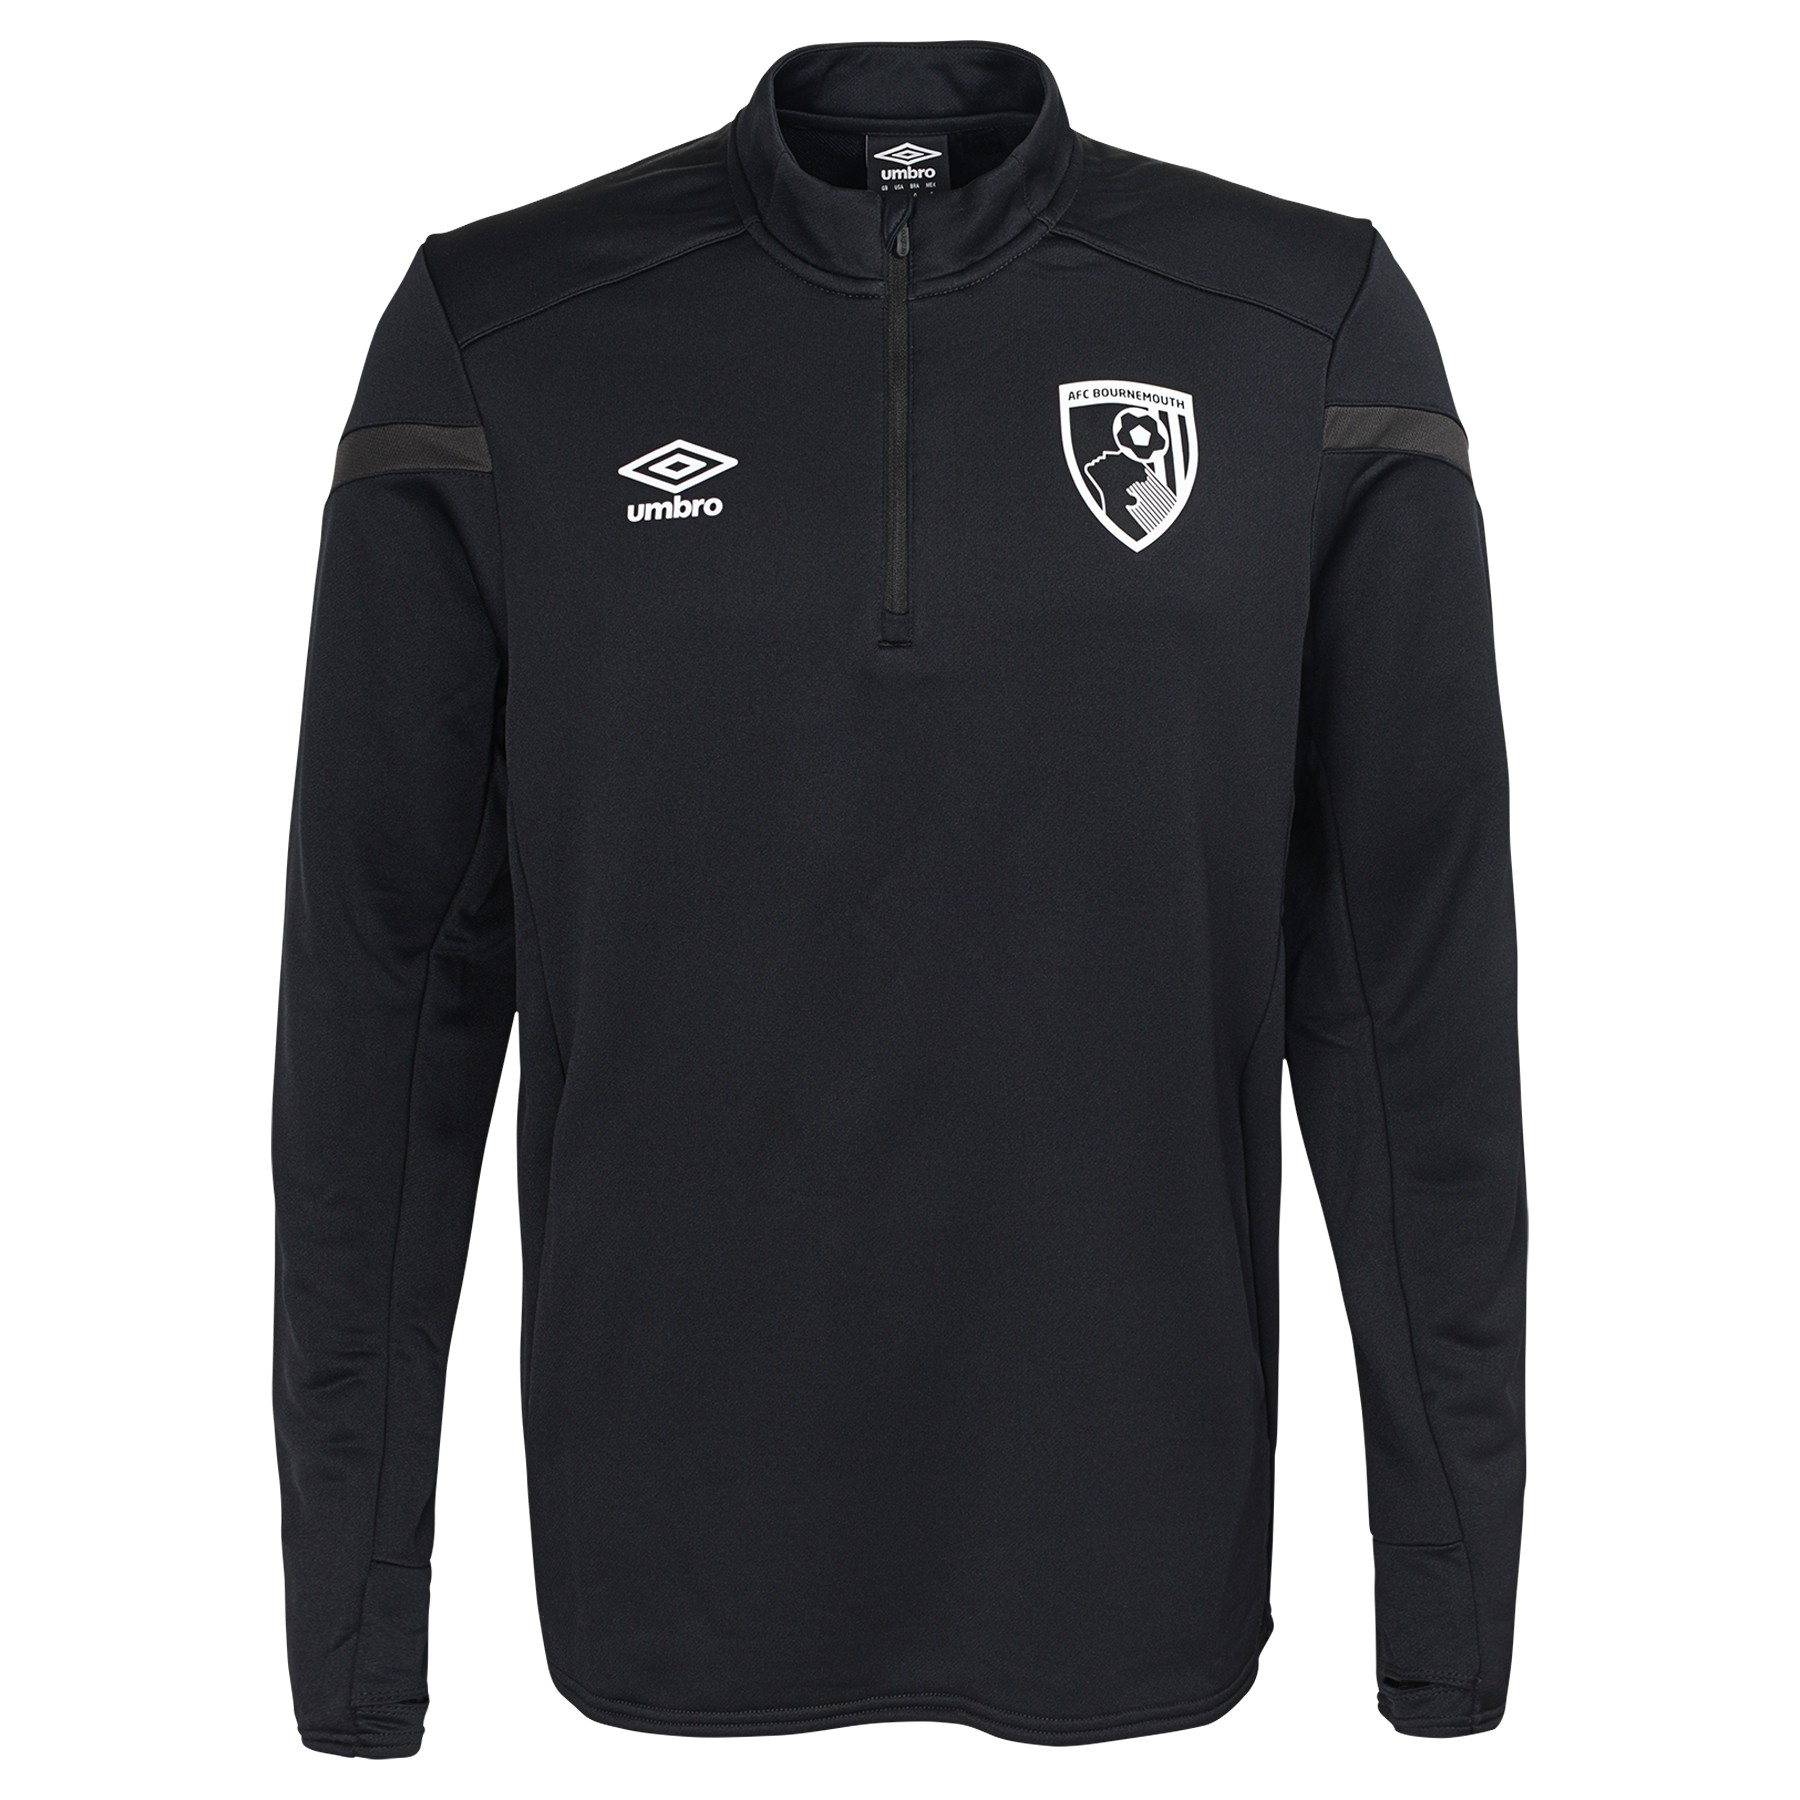 Download Umbro Men's AFC Bournemouth 19/20 Half Zip Soccer Jersey Shirt, Black/Phantom | eBay